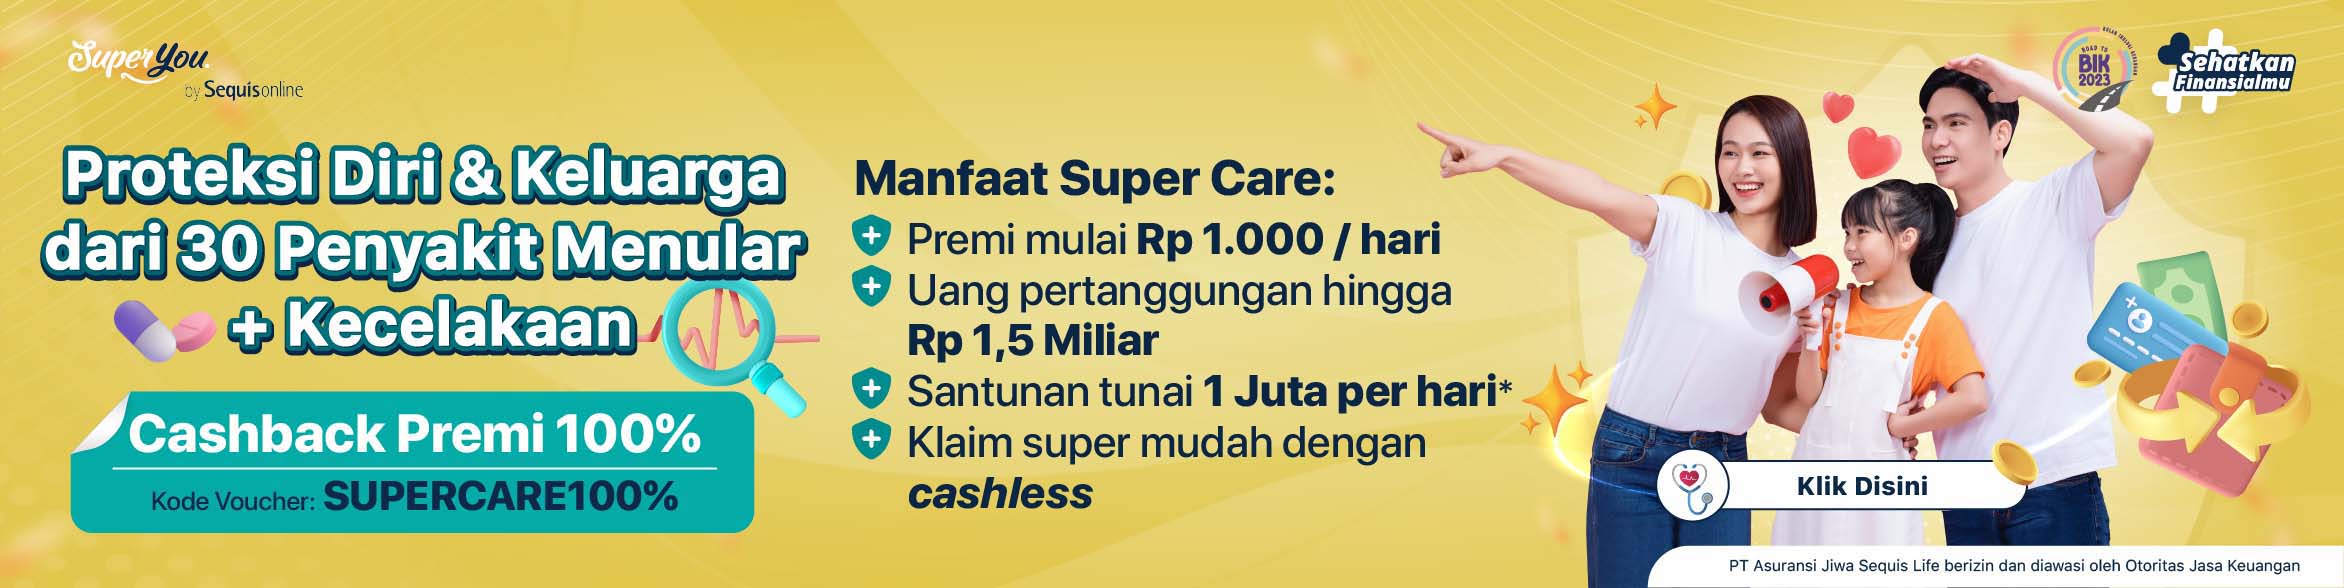 Super Care 100